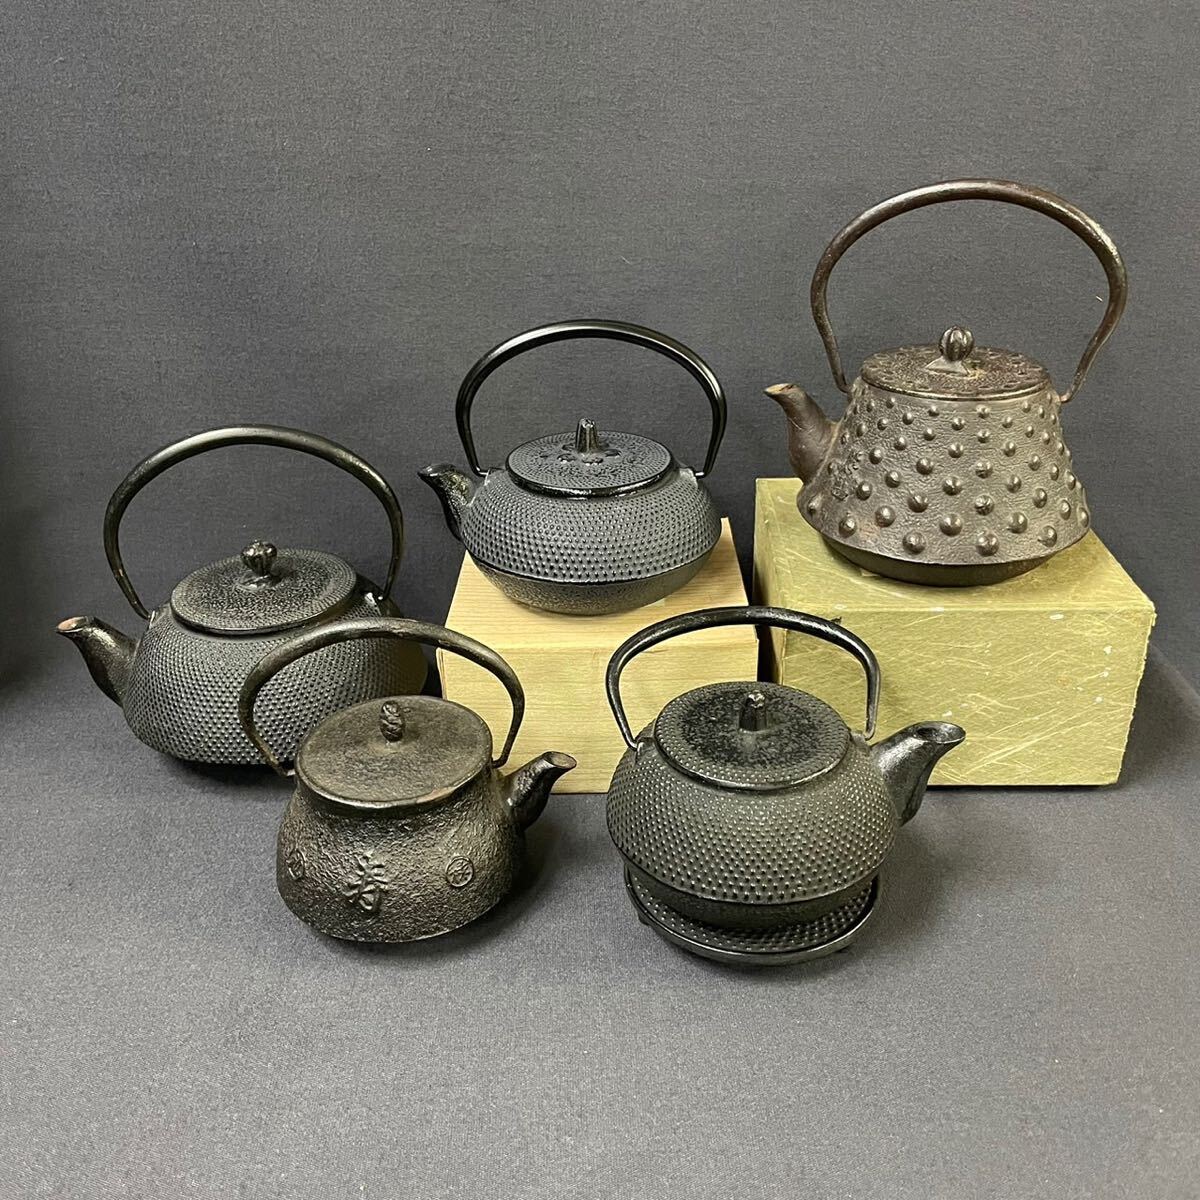 南部鉄器 急須 5点まとめ 約4kg 盛栄堂 岩鋳 丸政 鉄瓶 茶器 煎茶道具の画像1